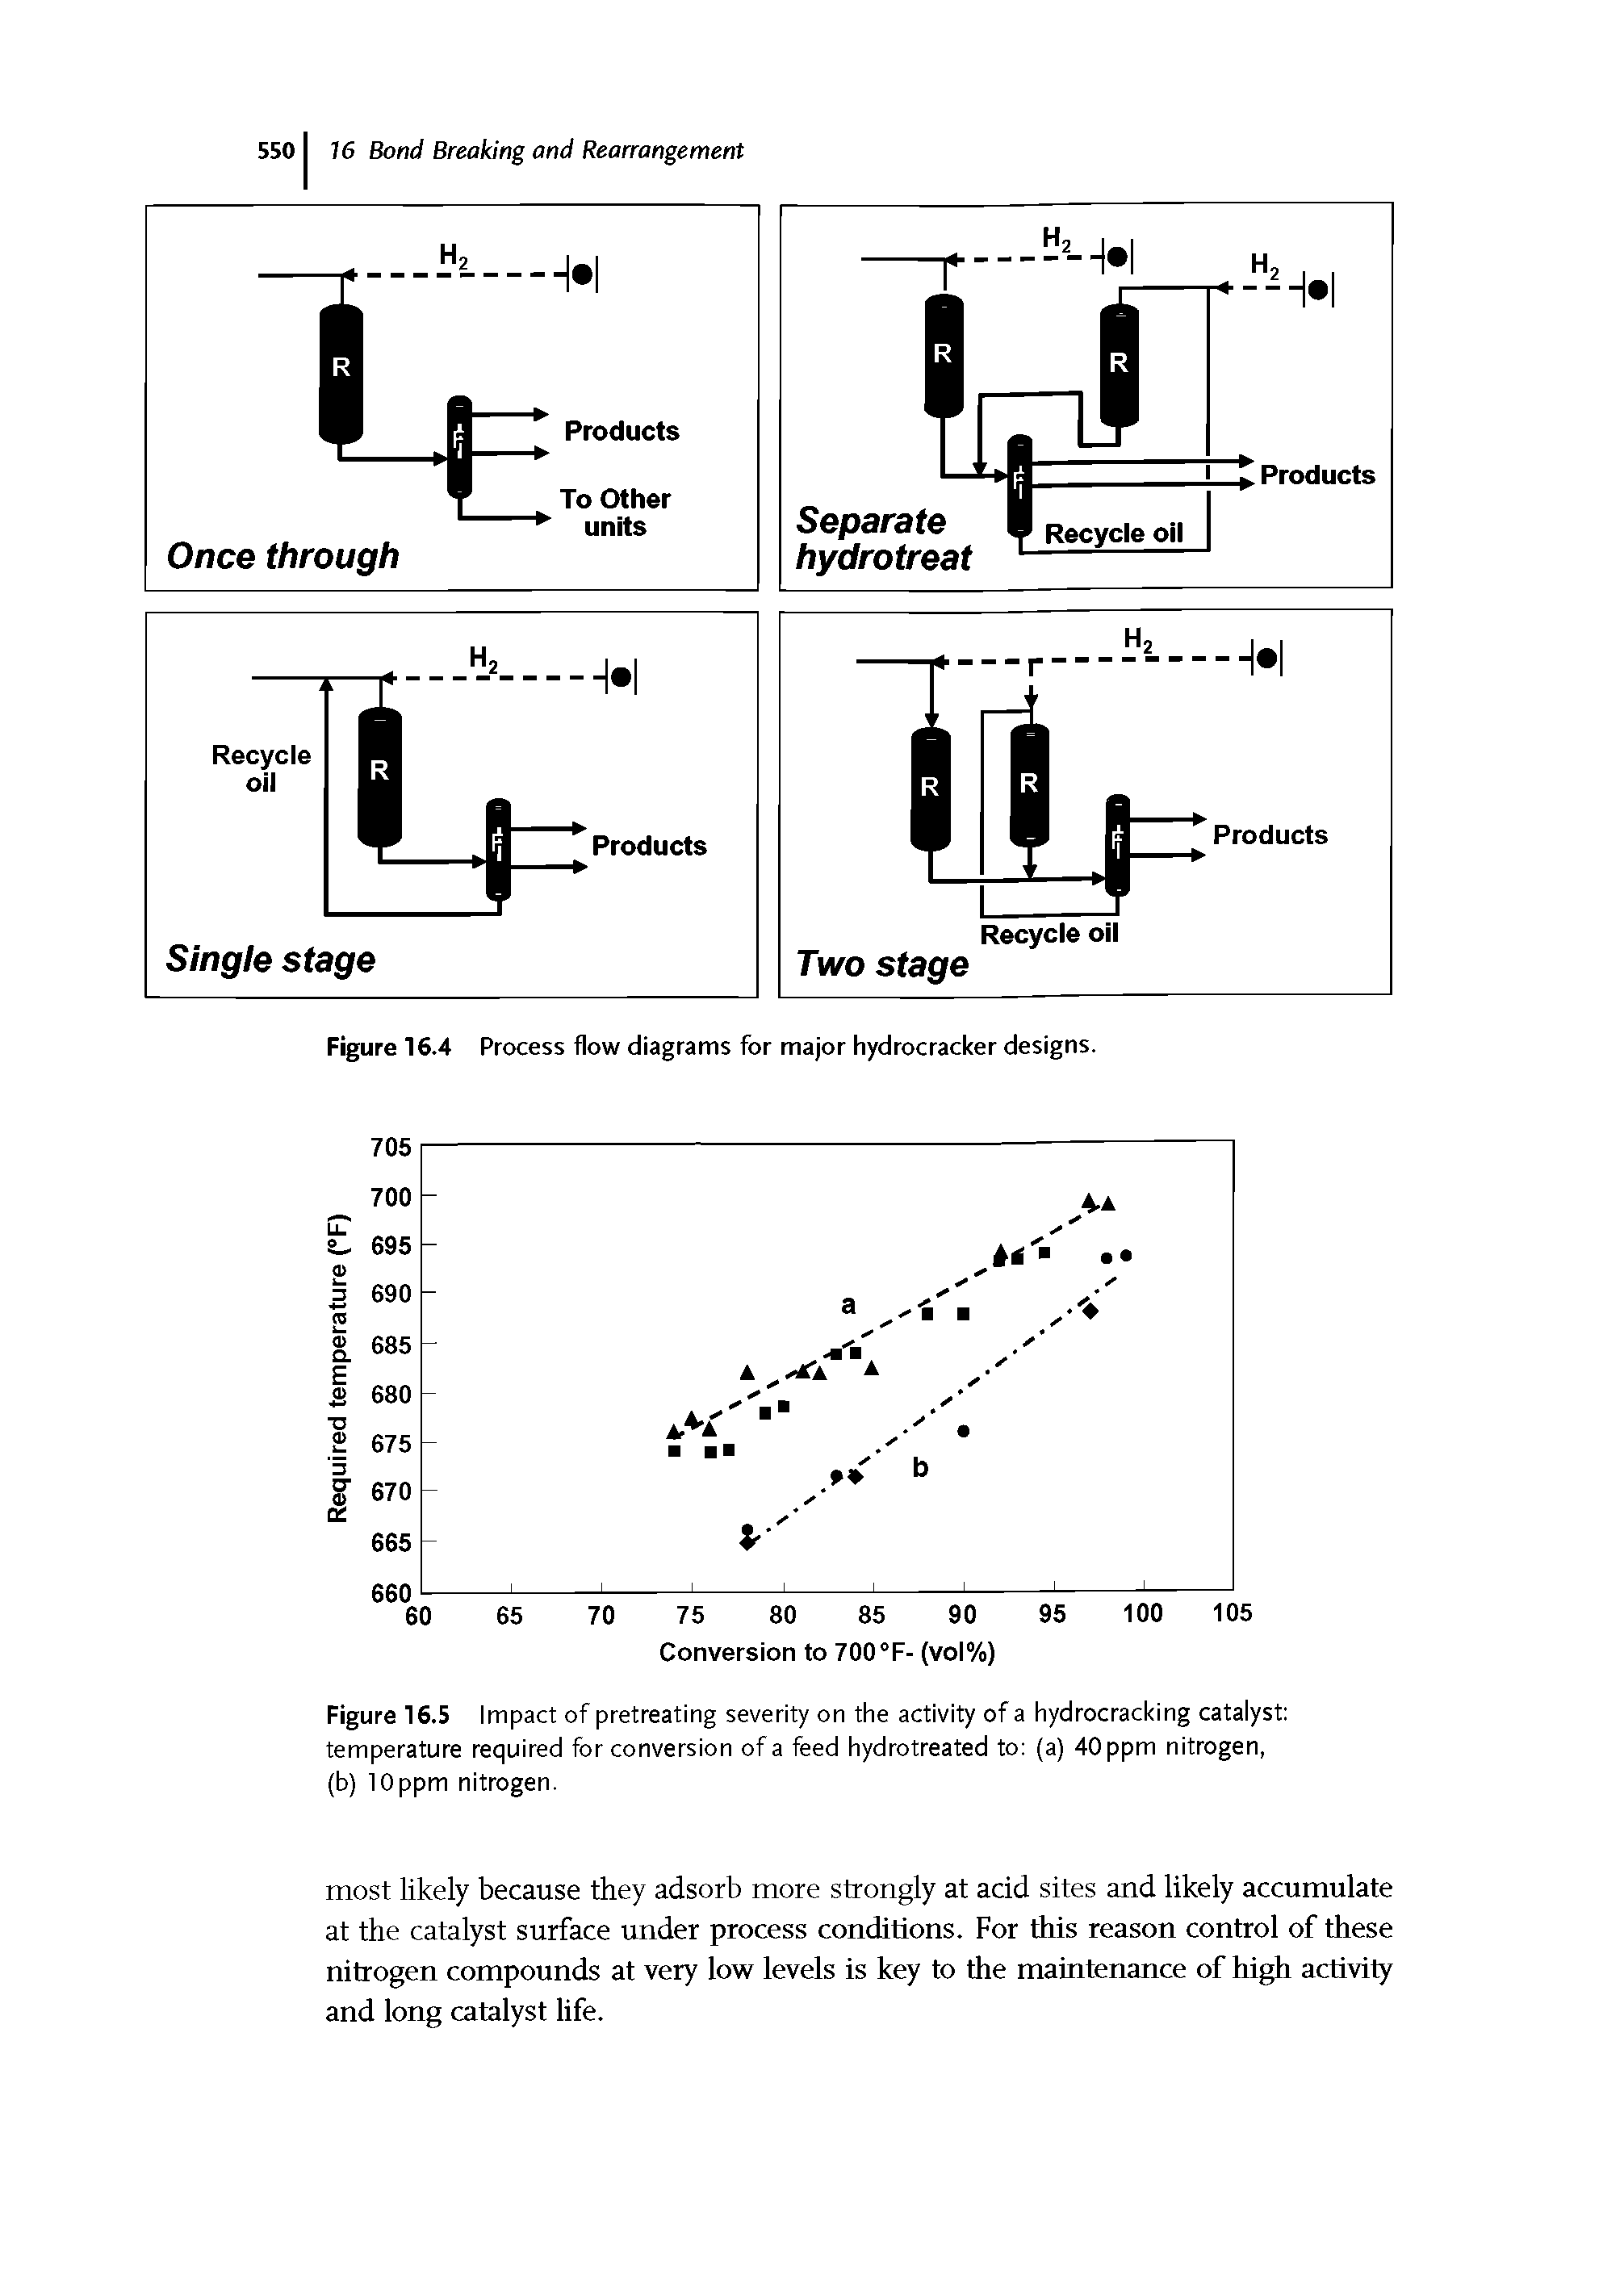 Figure 16.4 Process flow diagrams for major hydrocracker designs.